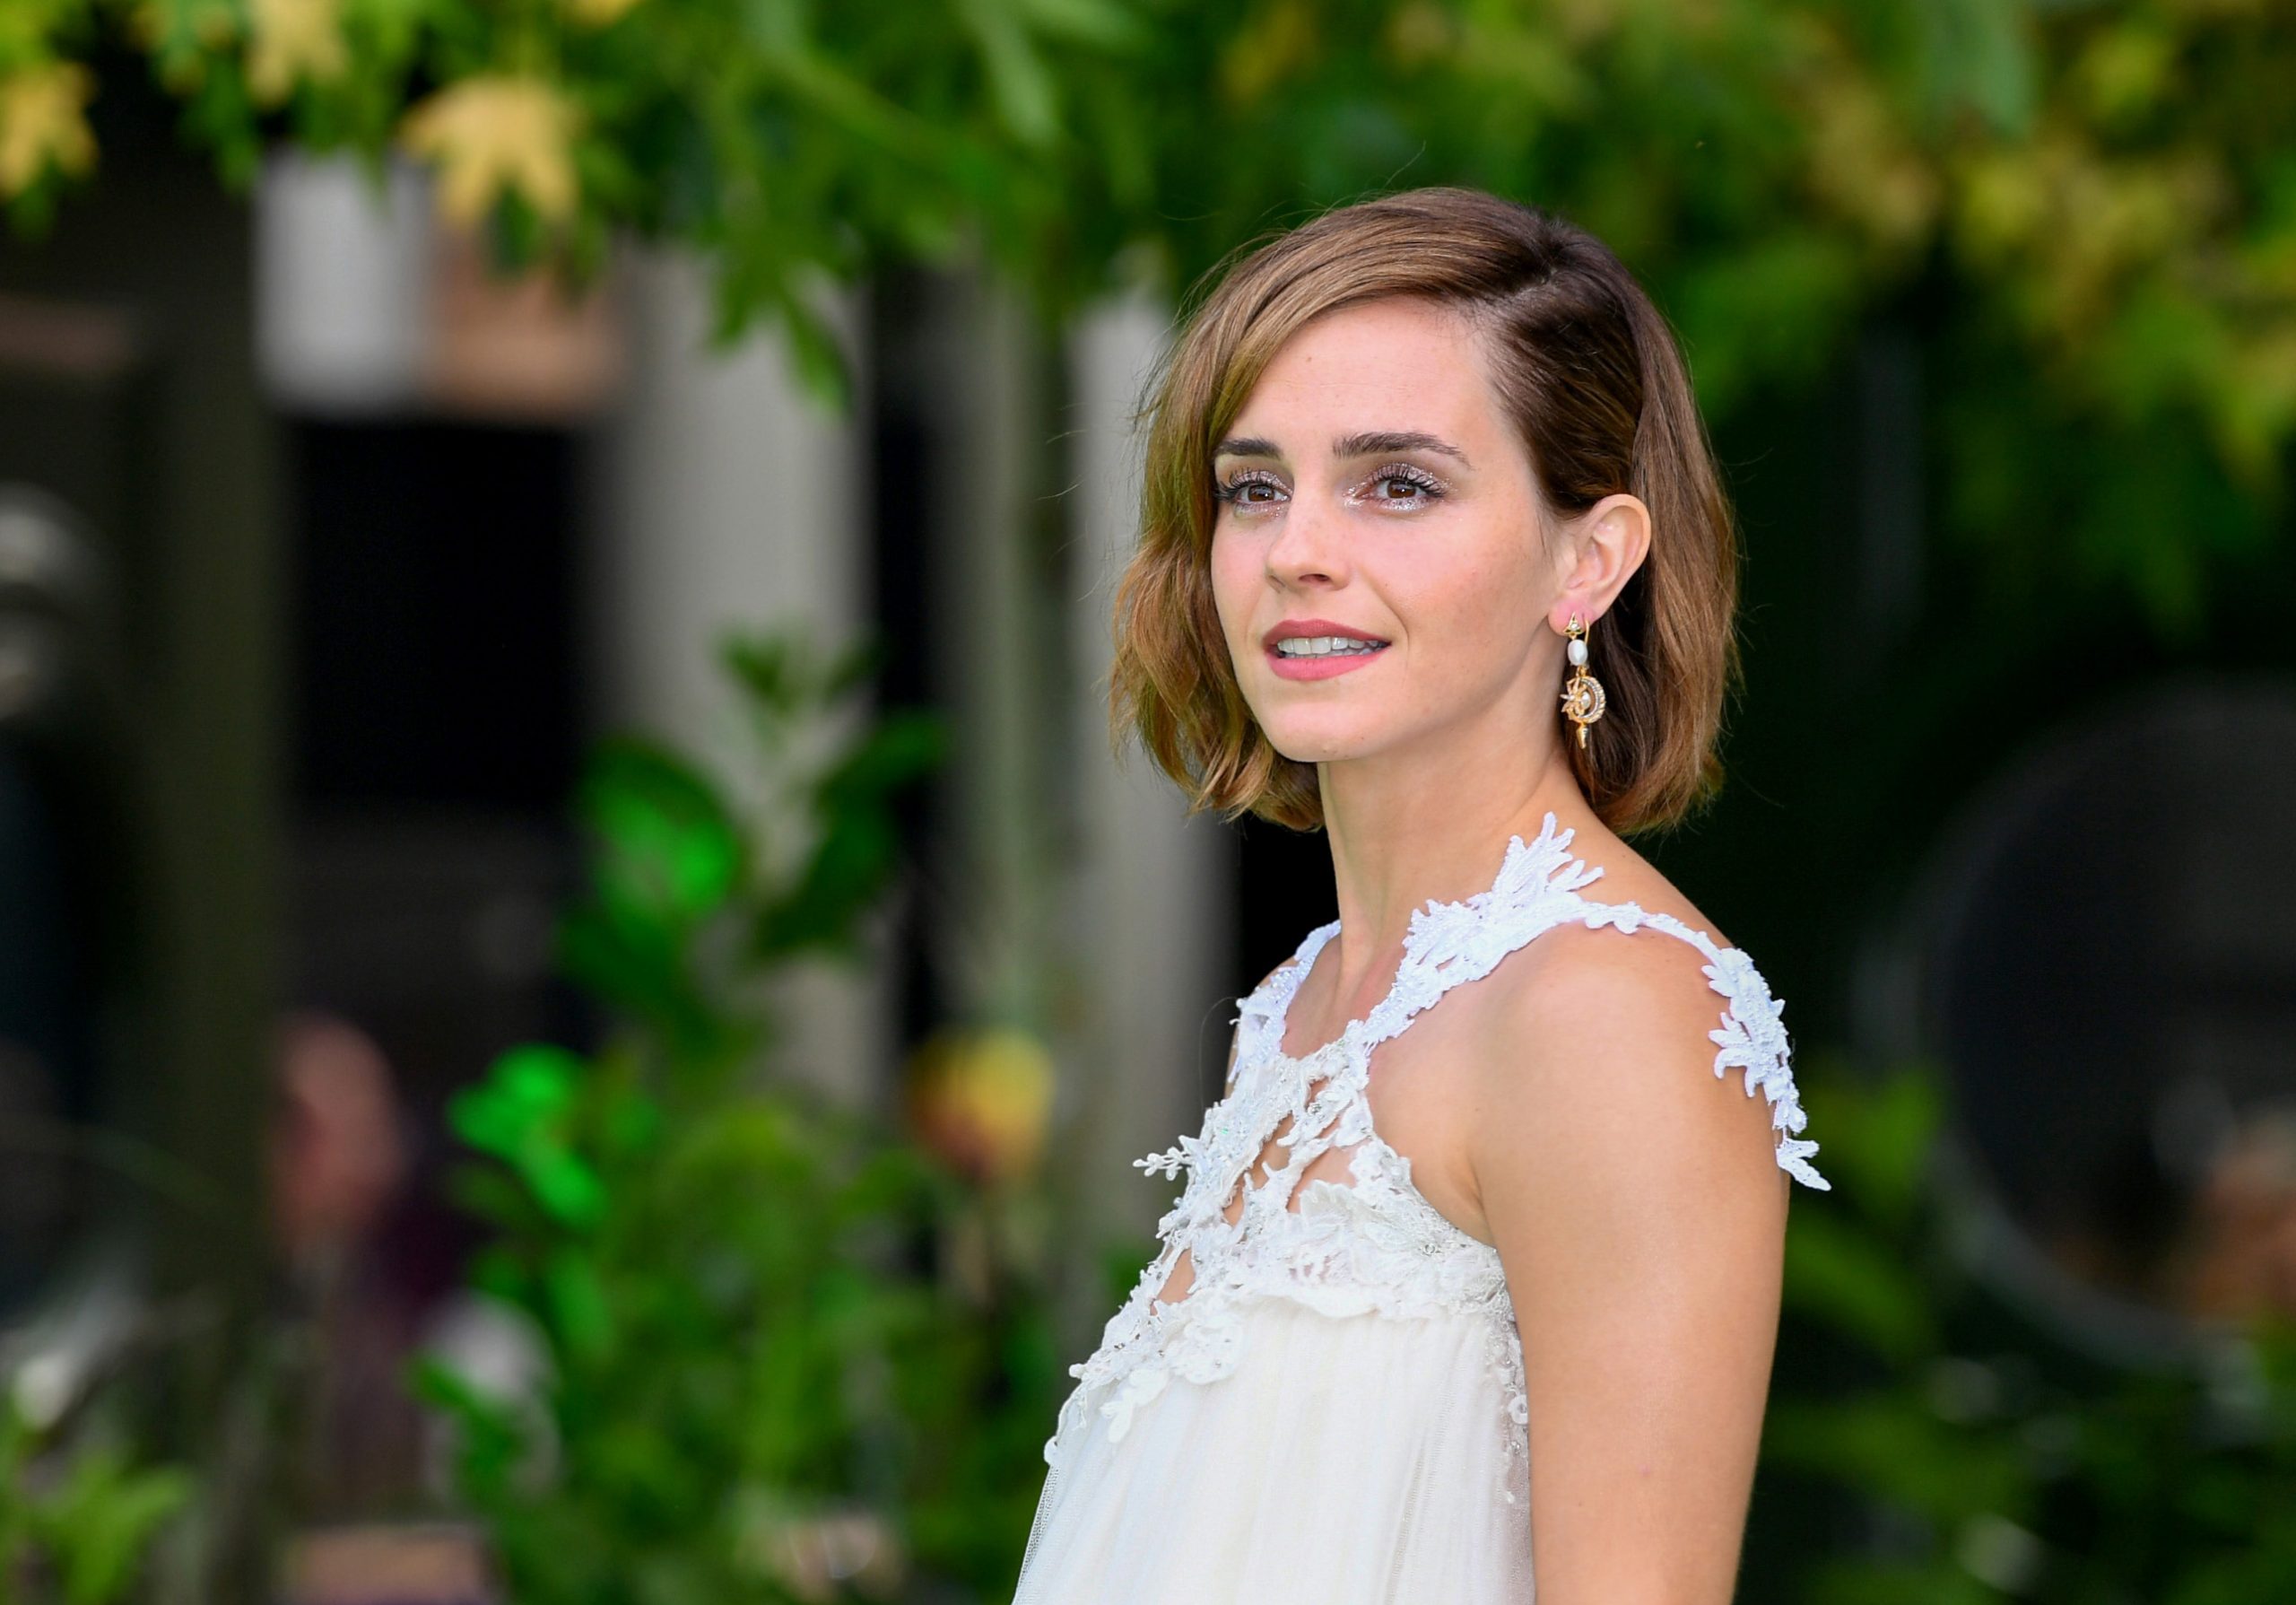 Emma Watson: To look της είναι ό,τι preppy για την επόμενη βραδινή έξοδό σου #GetTheLook